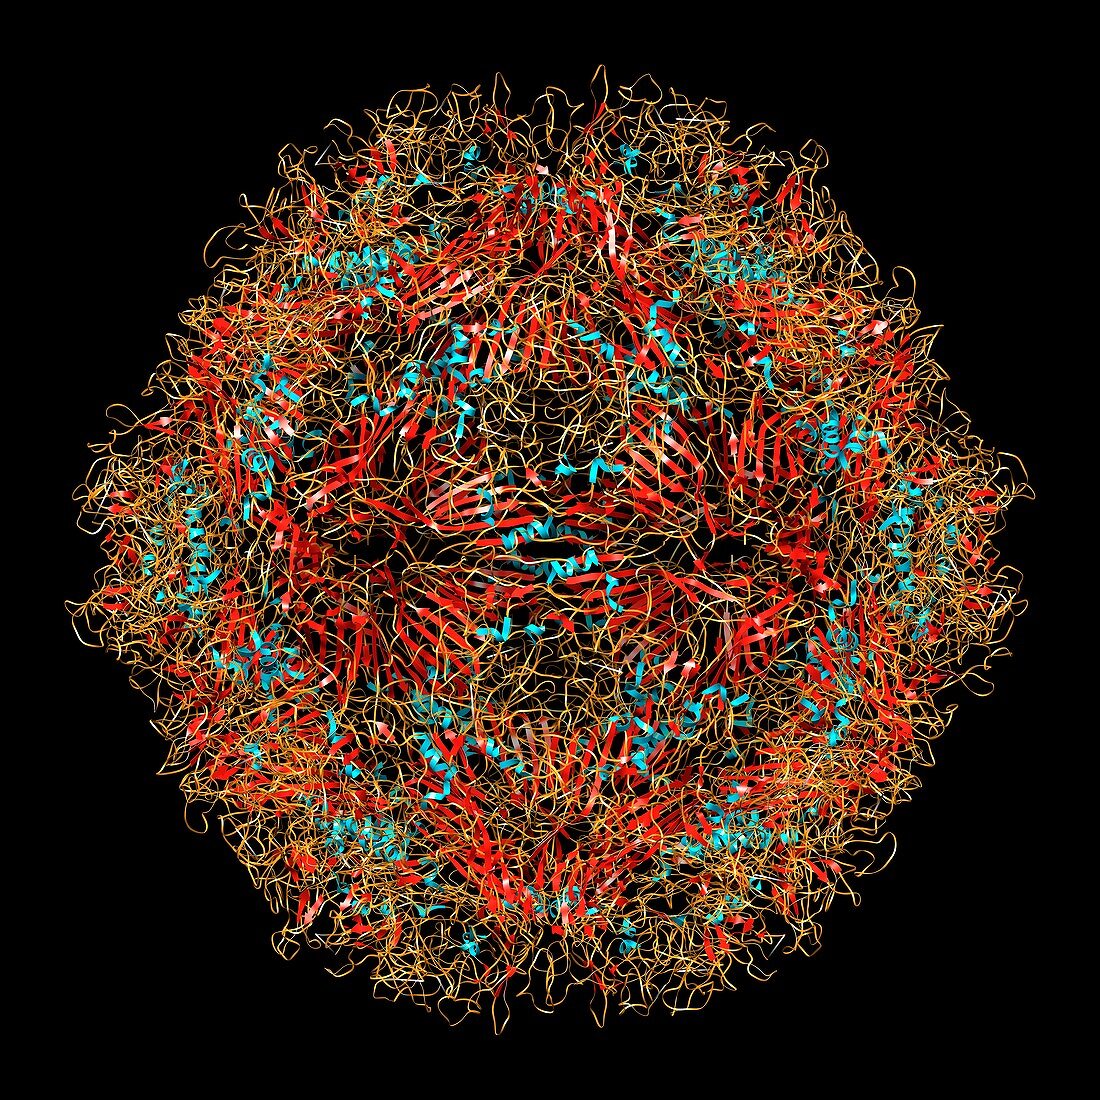 Parvovirus particle,molecular model